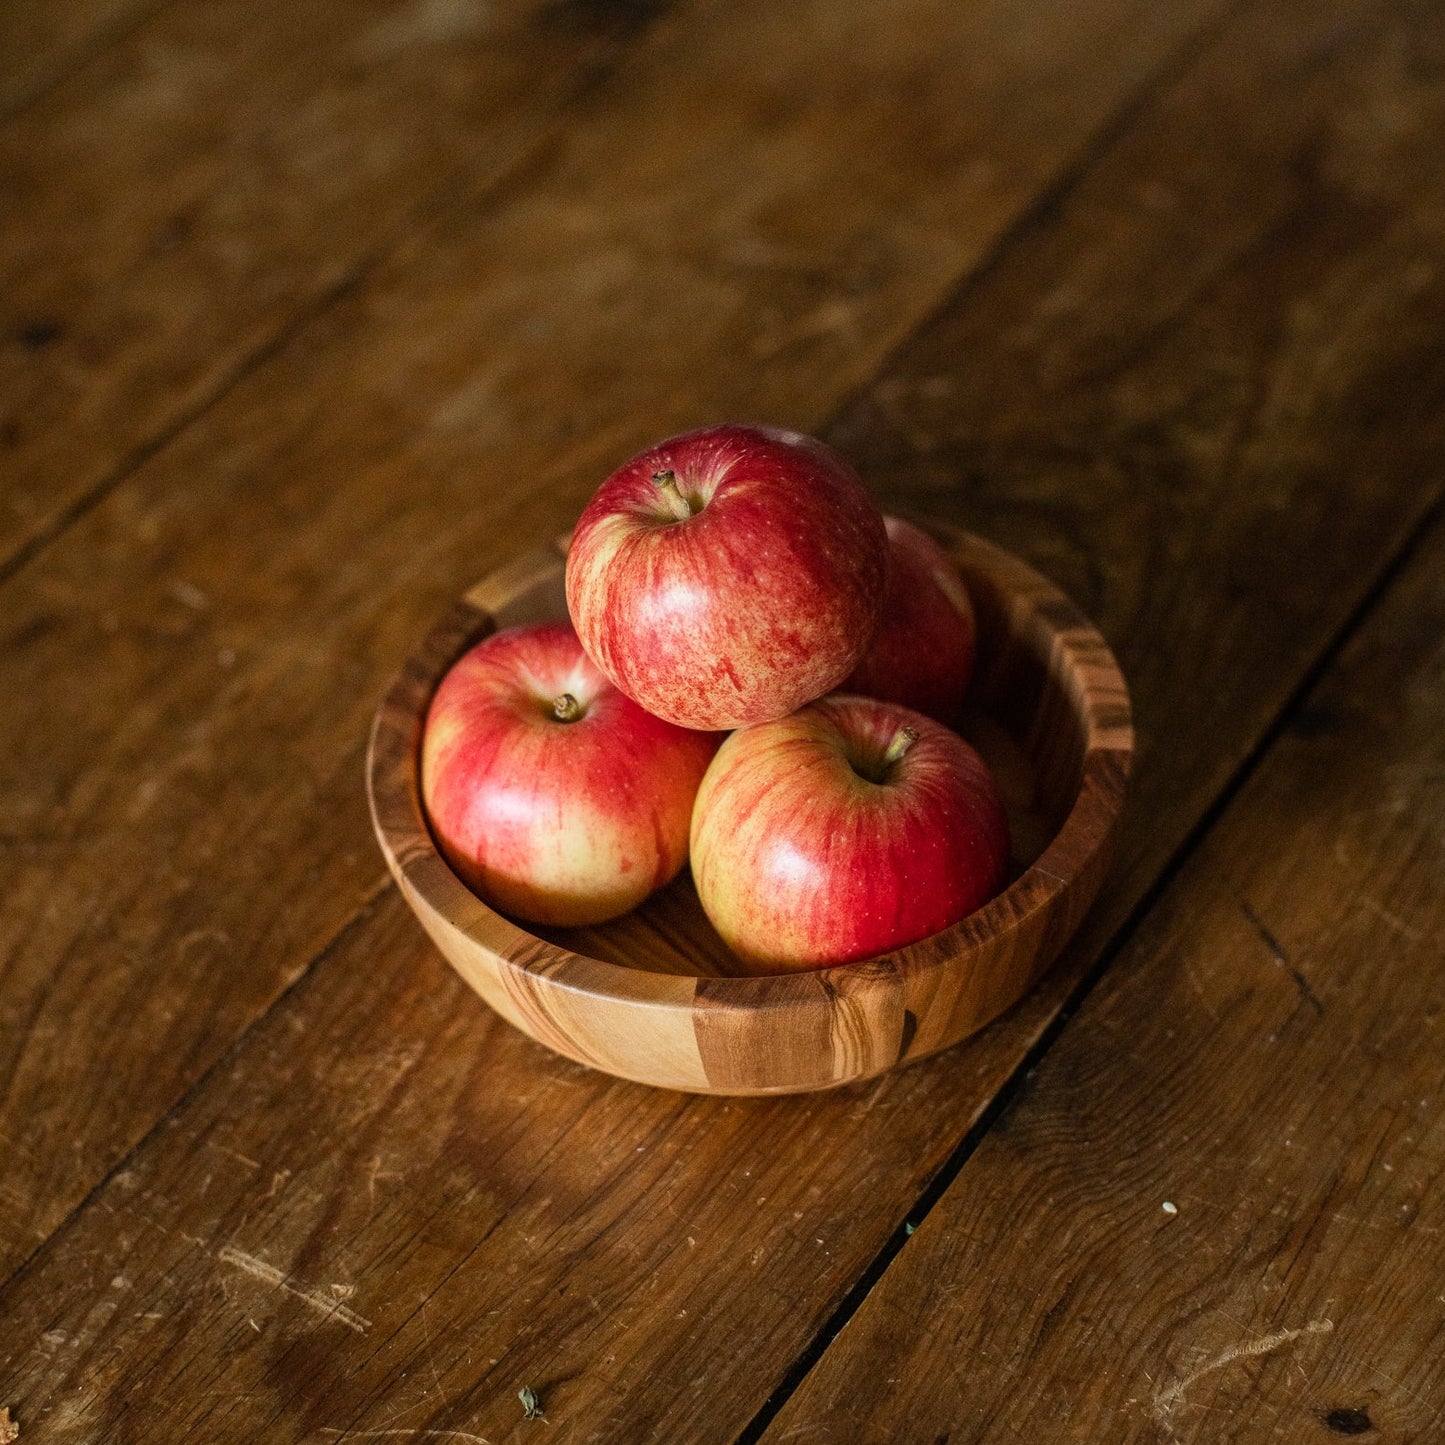 Organic Macoun Apples, 1 lb, F.E.E.D. Sonoma